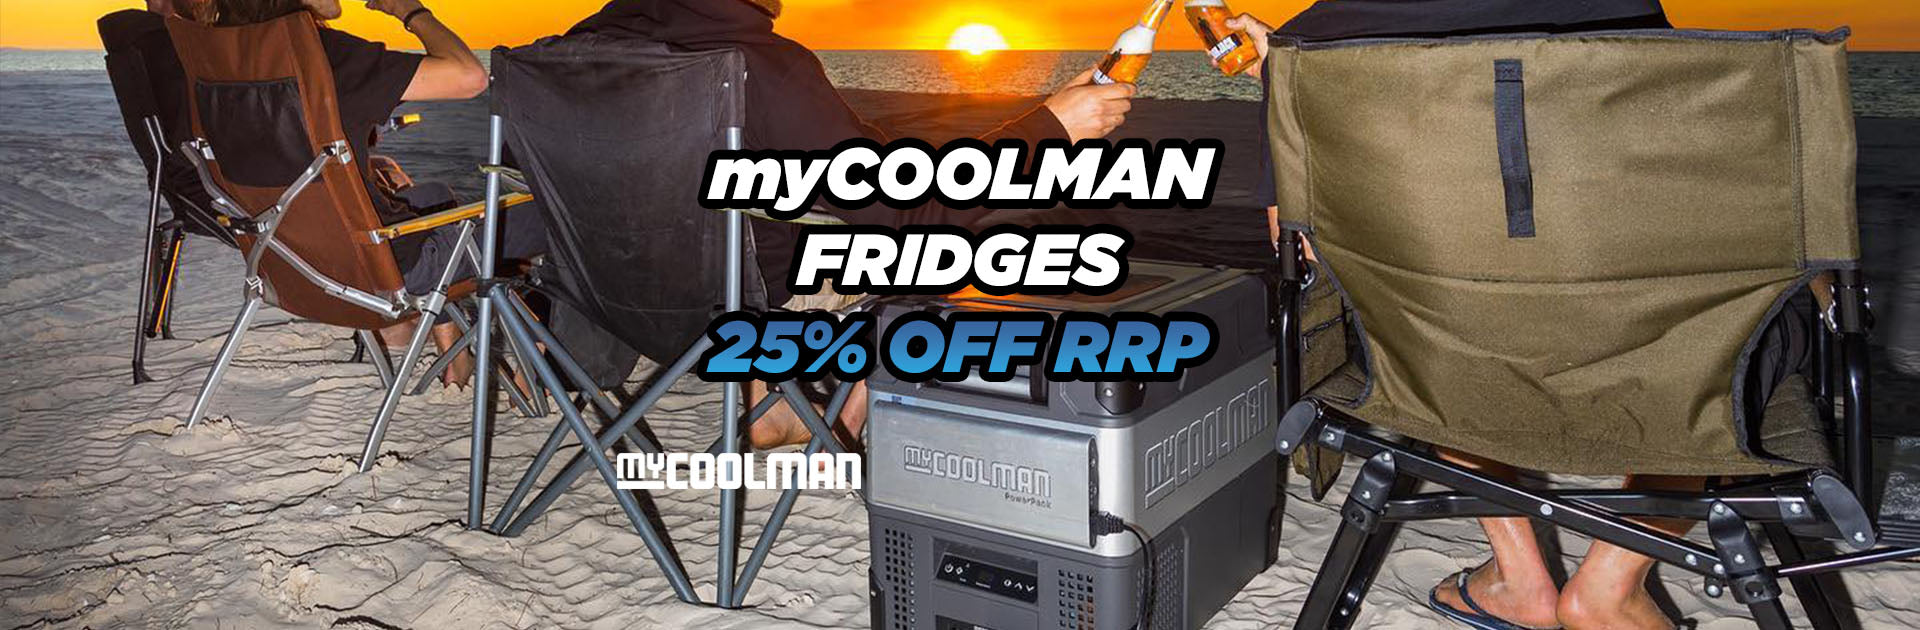 4WD 24/7 25% OFF RRP on myCoolman fridges